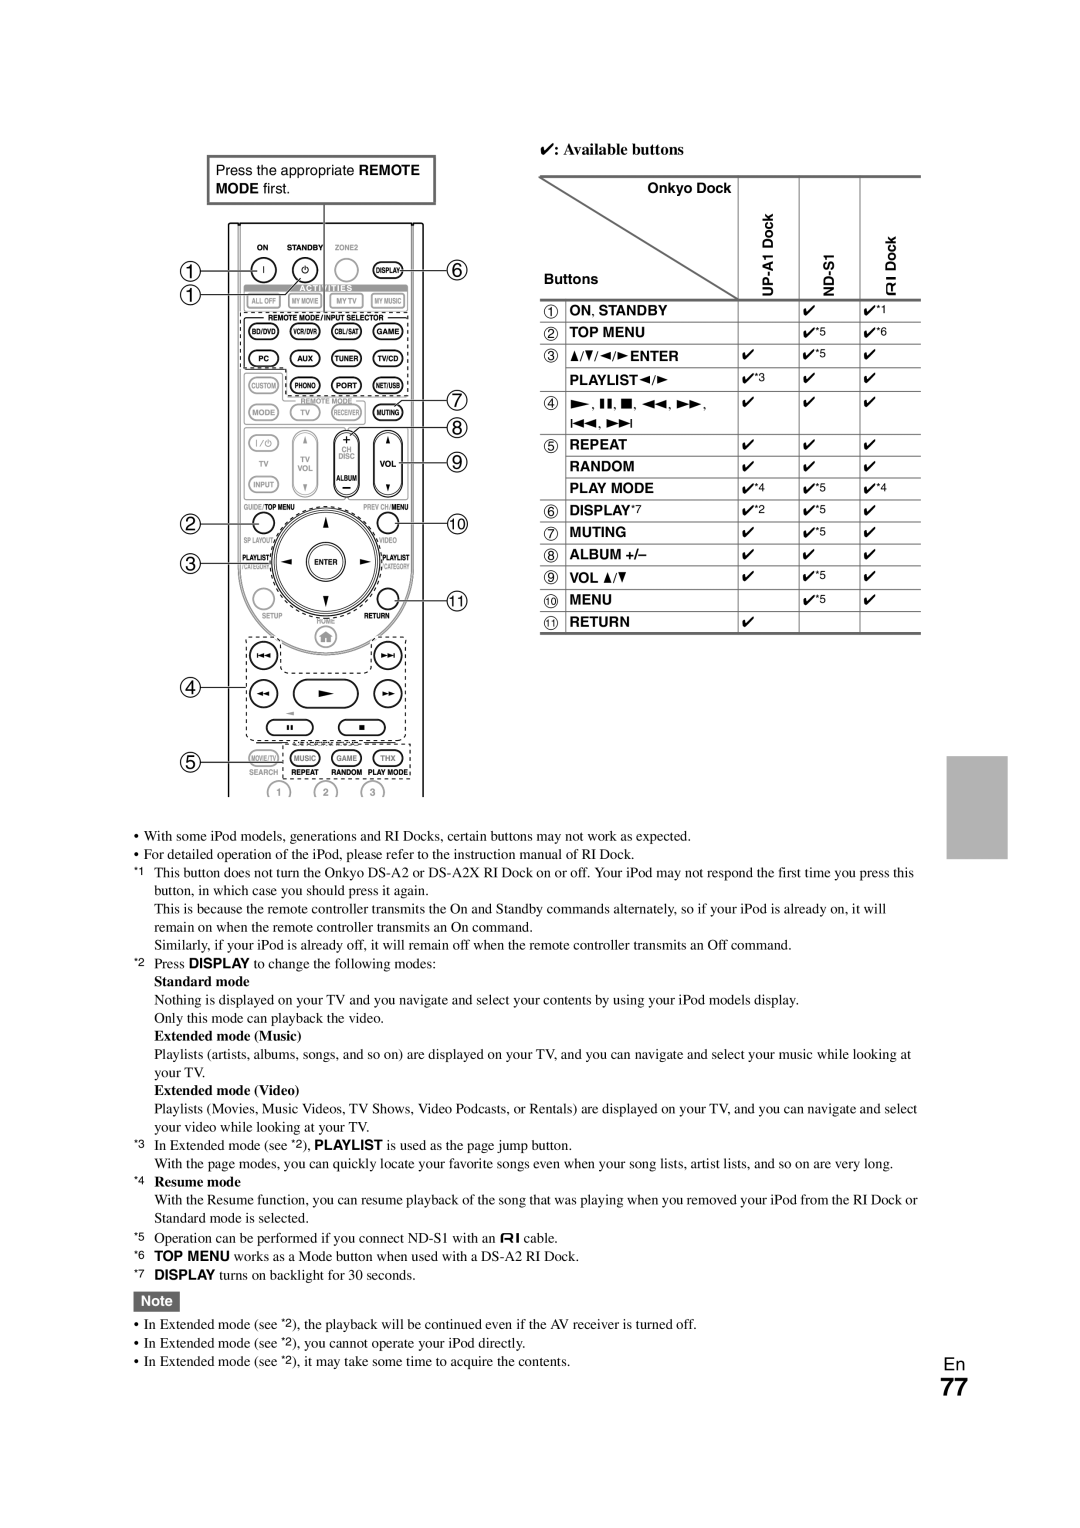 Onkyo TX-NR708 instruction manual g h i bj c k d e, Available buttons 